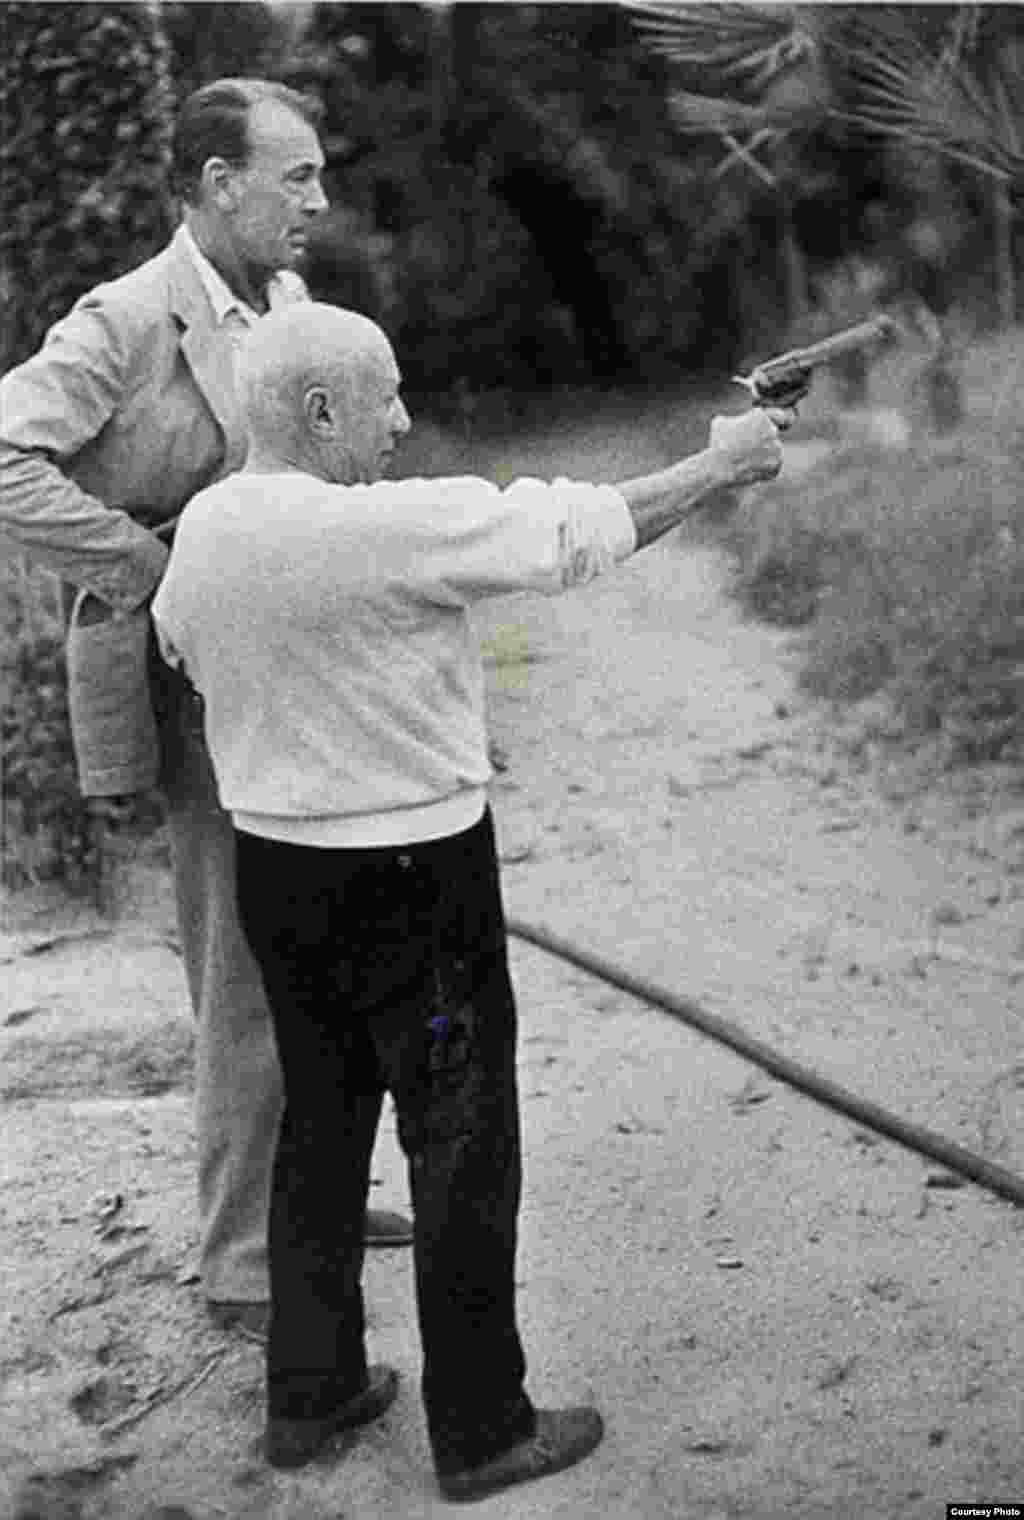 © David Douglas Duncan, Gary Cooper and Picasso with a pistol. La Californie, 1957